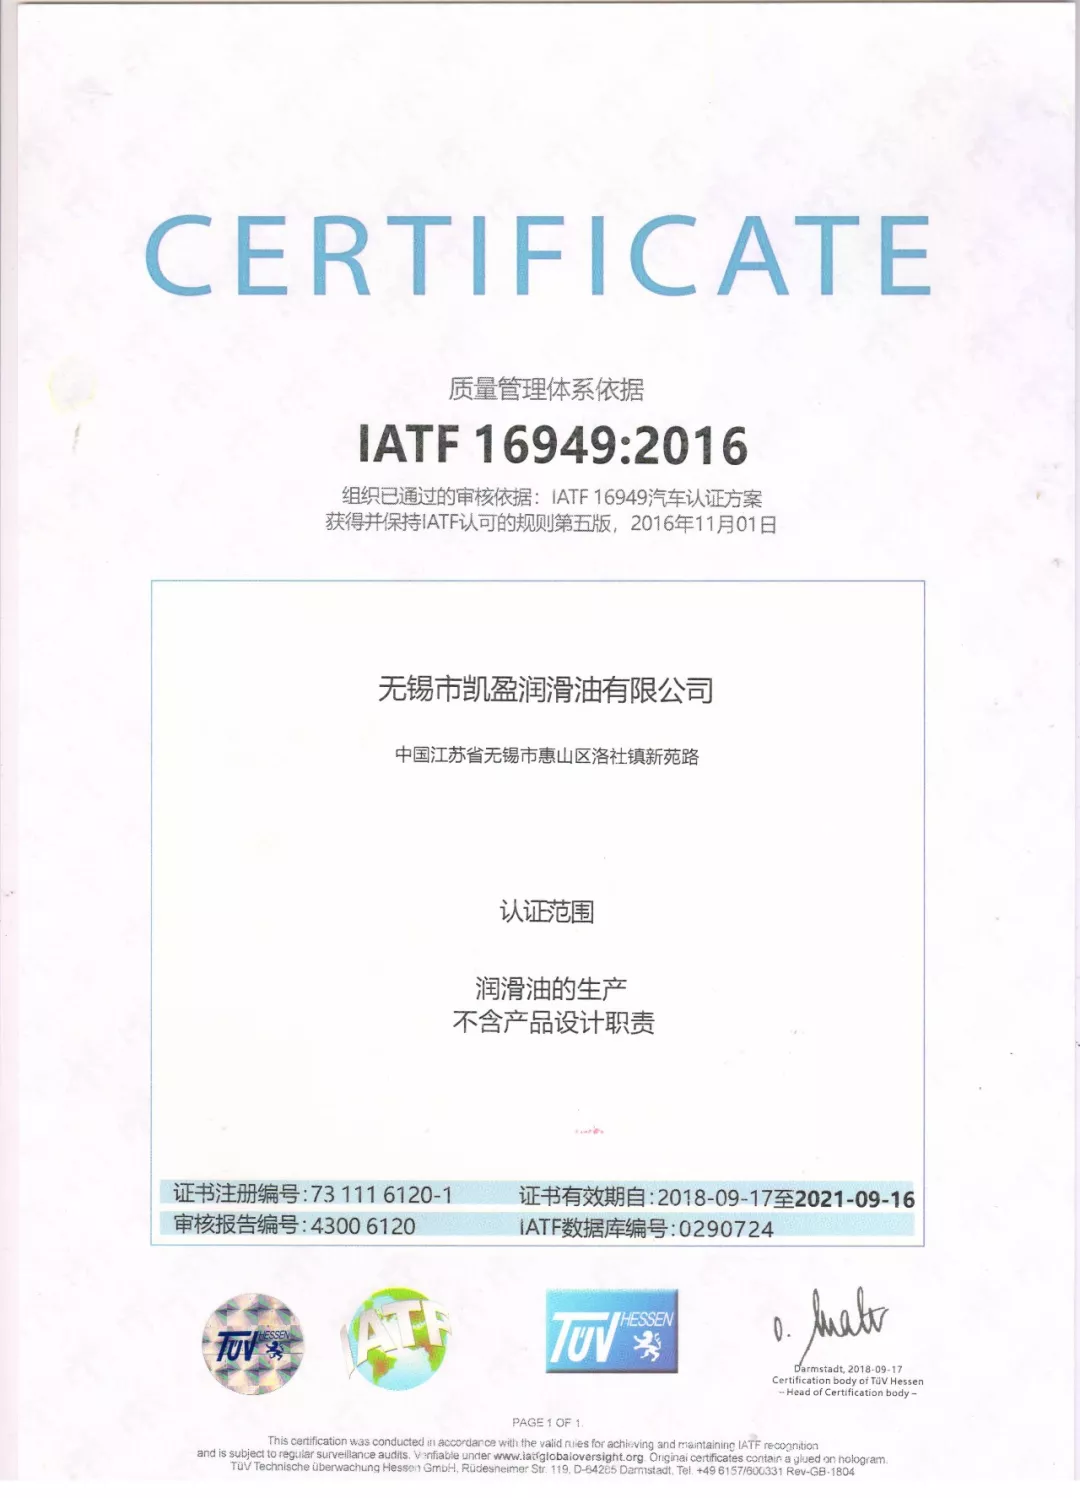        IATF认证在汽车行业的认可度非常高，不少全球知名车厂已强制要求其供应商通过IATF 16949认证。此次获得认证，将增加汽车领域合作伙伴对凯盈润滑油产品质量的信心。 